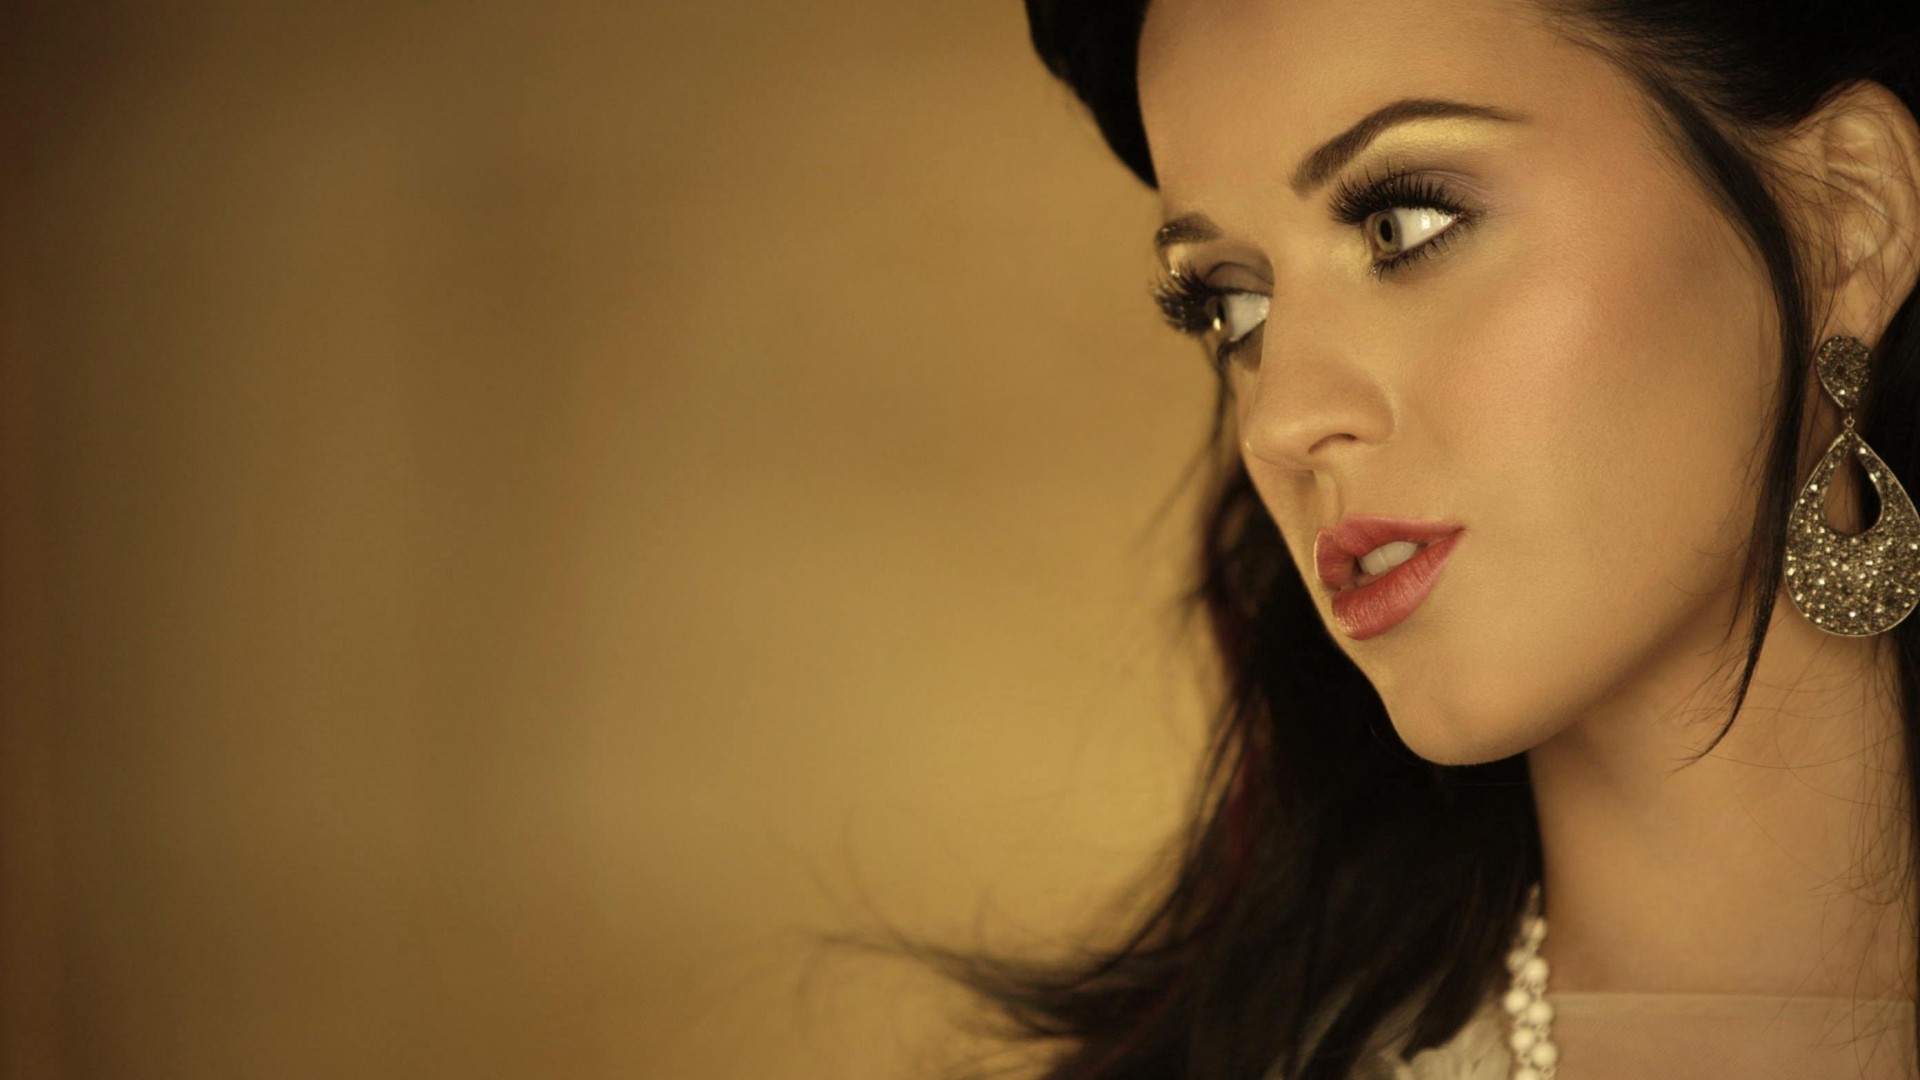 Katy Perry Beautiful Photoshoot Wallpapers